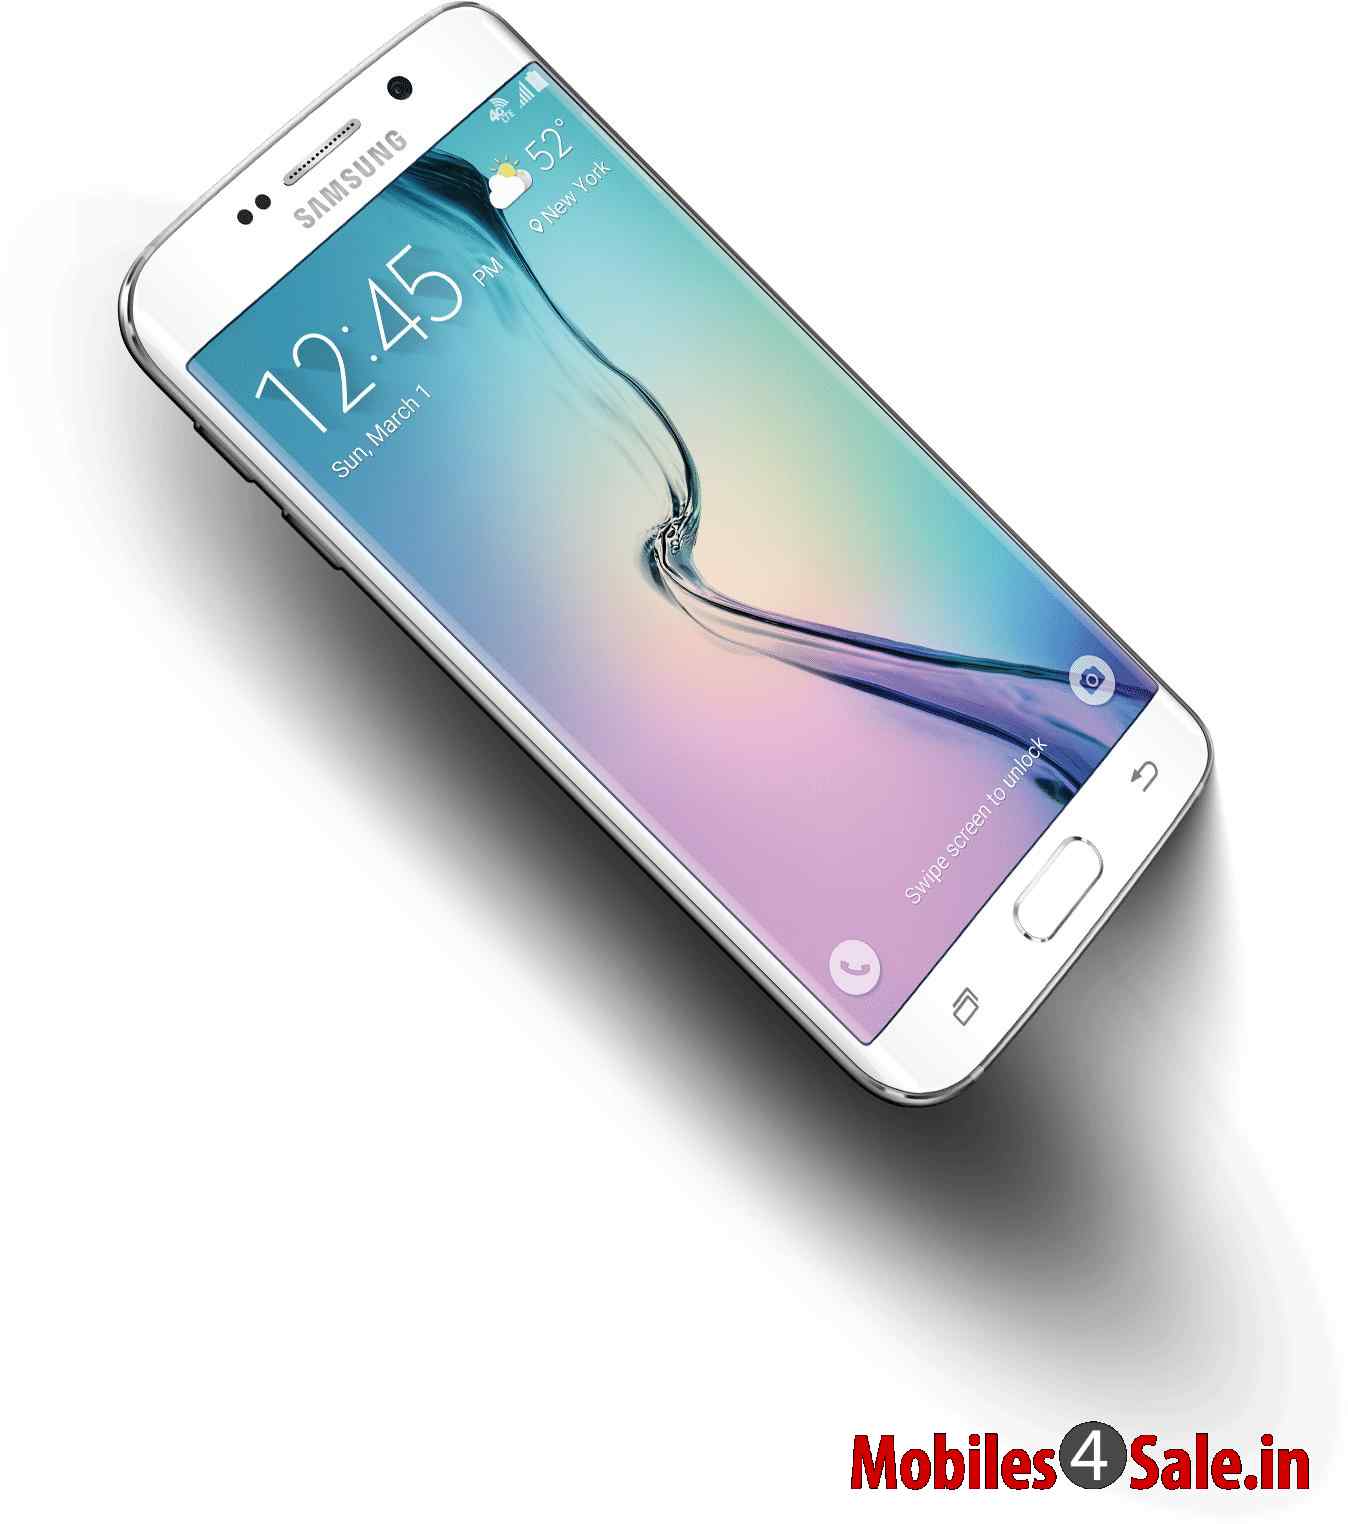 Galaxy x6. Samsung Galaxy s6. Самсунг галакси с6 Едге. Samsung Galaxy s6 2015. Samsung Galaxy s6 Edge 2015.